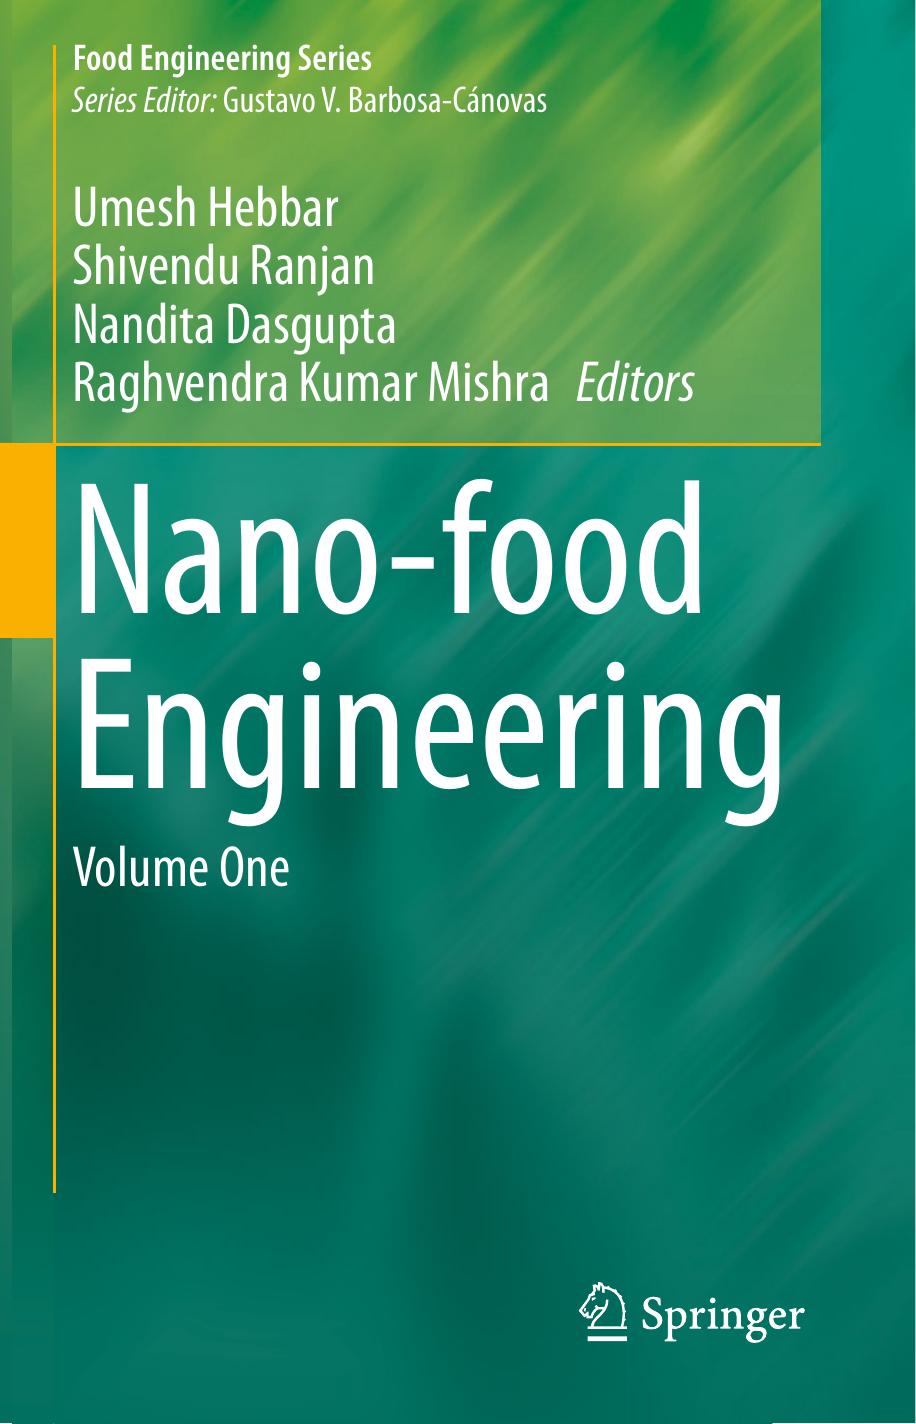 Nano-food Engineering  Volume One (Food Engineering Se 2020